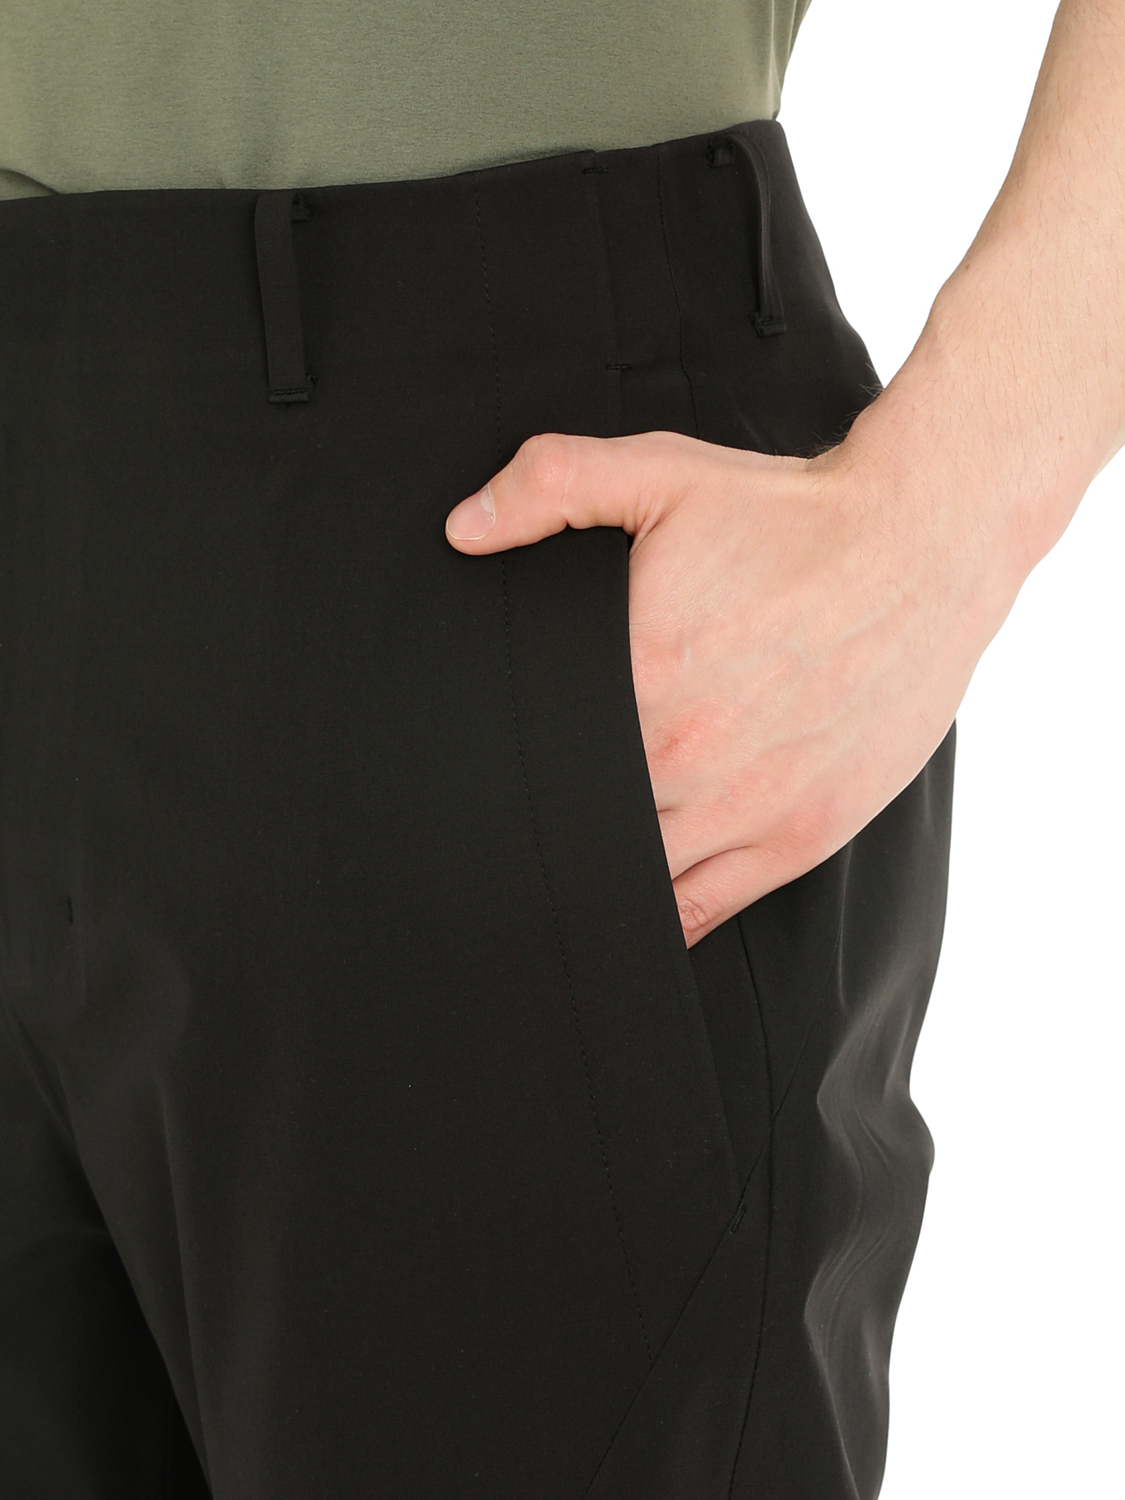 Брюки Toread Men's off-road softshell trousers 81059 Black